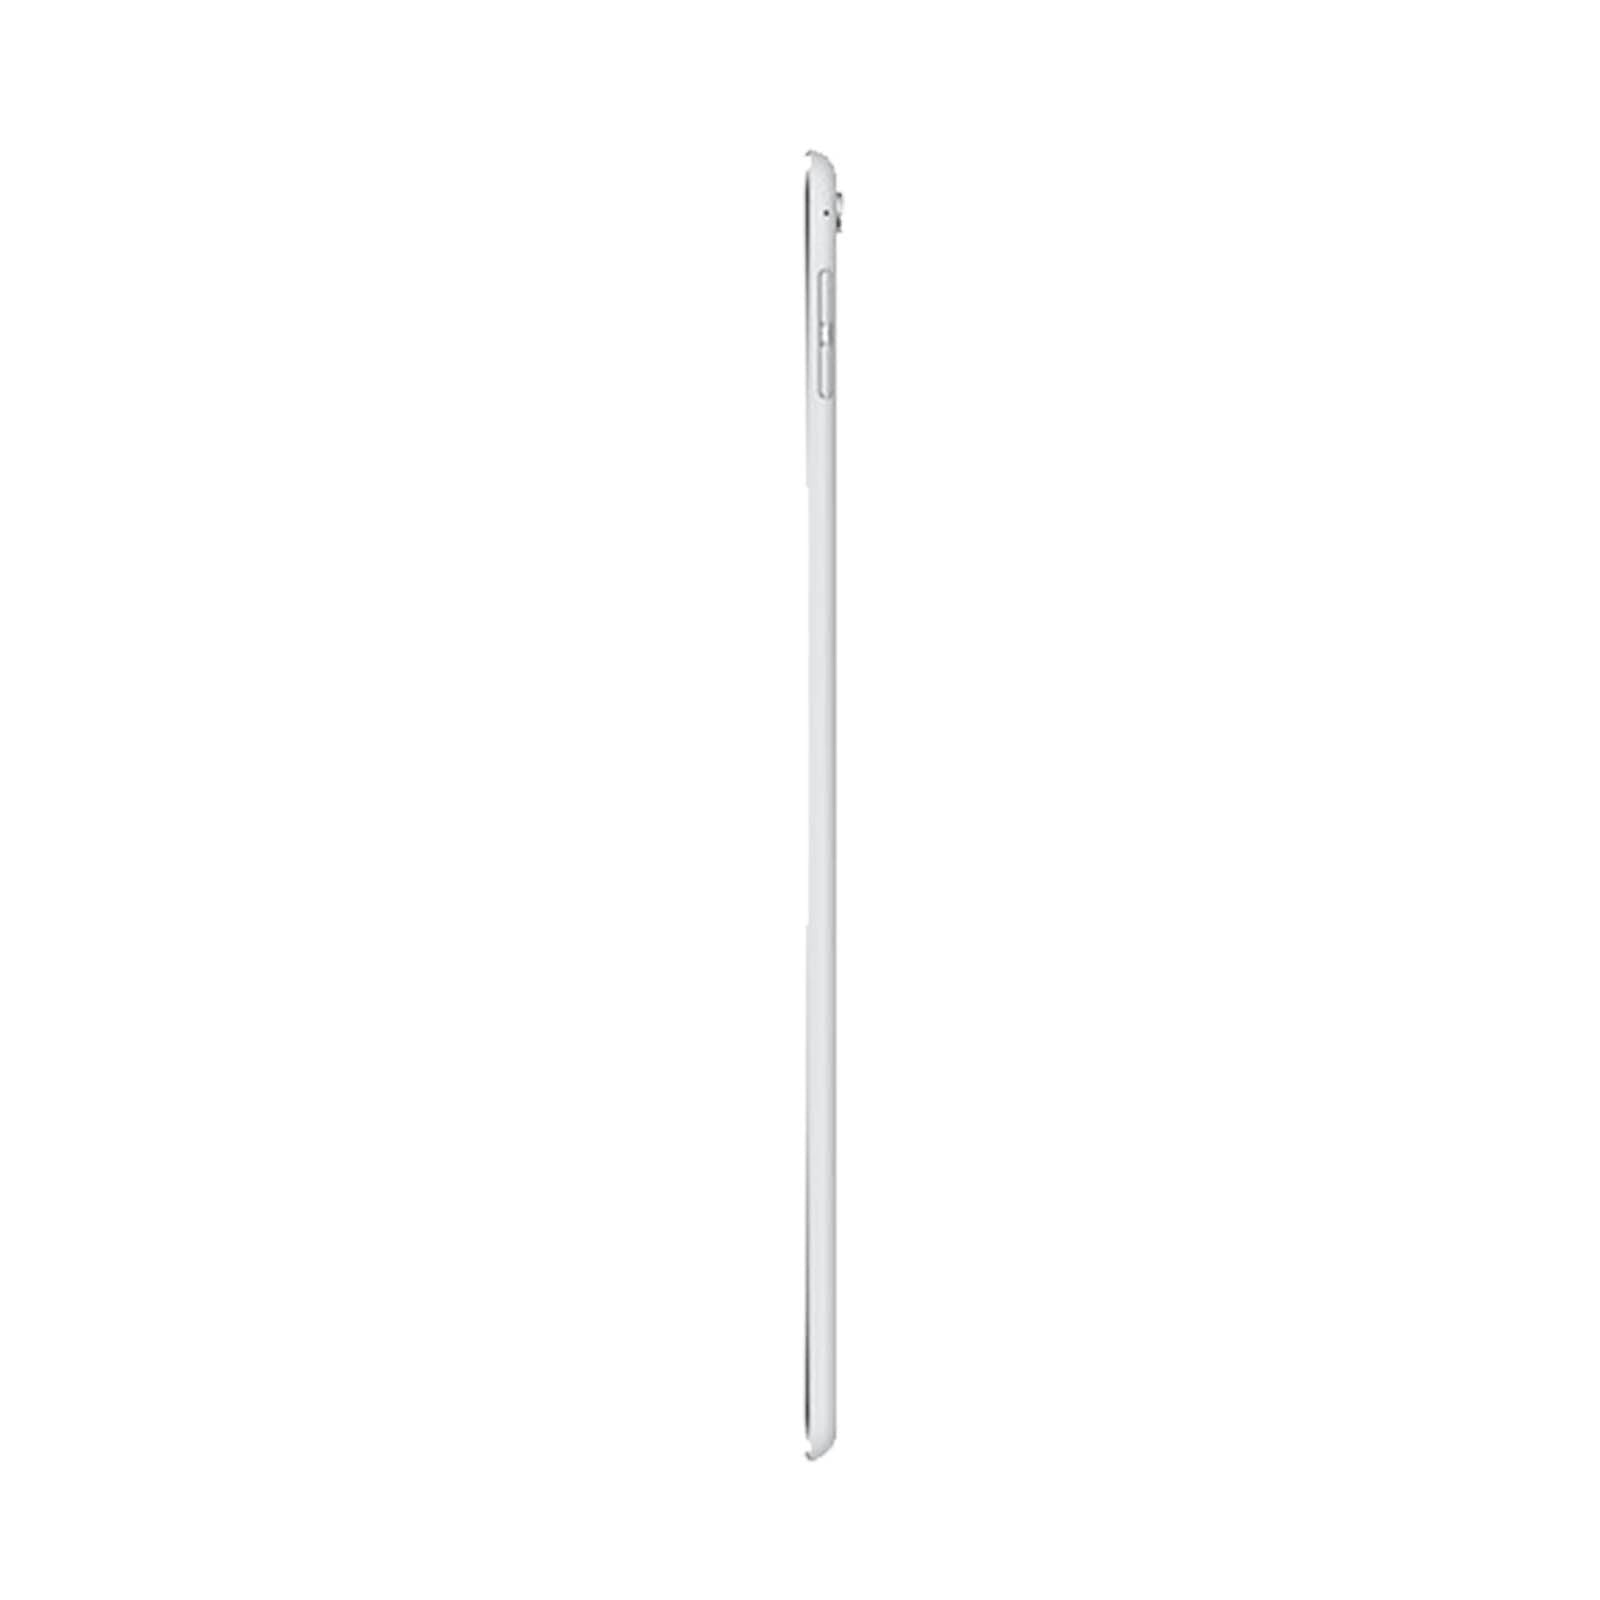 Apple iPad Pro 9.7 Zoll 32GB WiFi & Cellular Ohne Vertrag Silber Gut